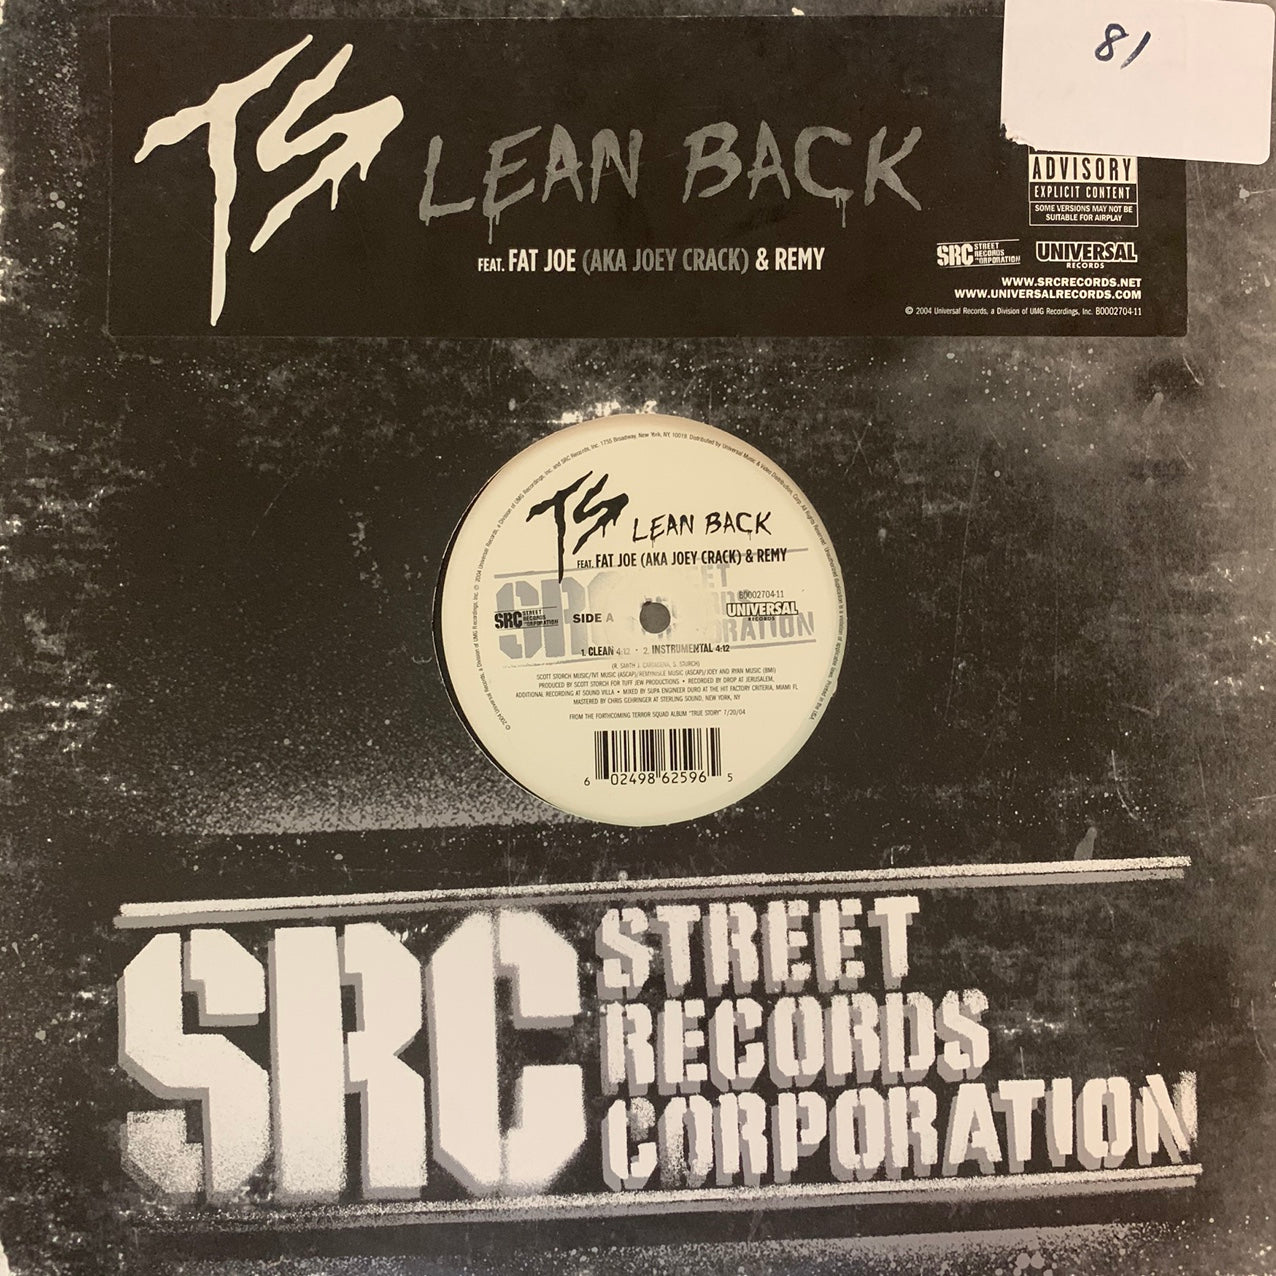 TS Terror Squad “Lean Back” Feat Fat Joe & Remy 4 Version 12inch Vinyl